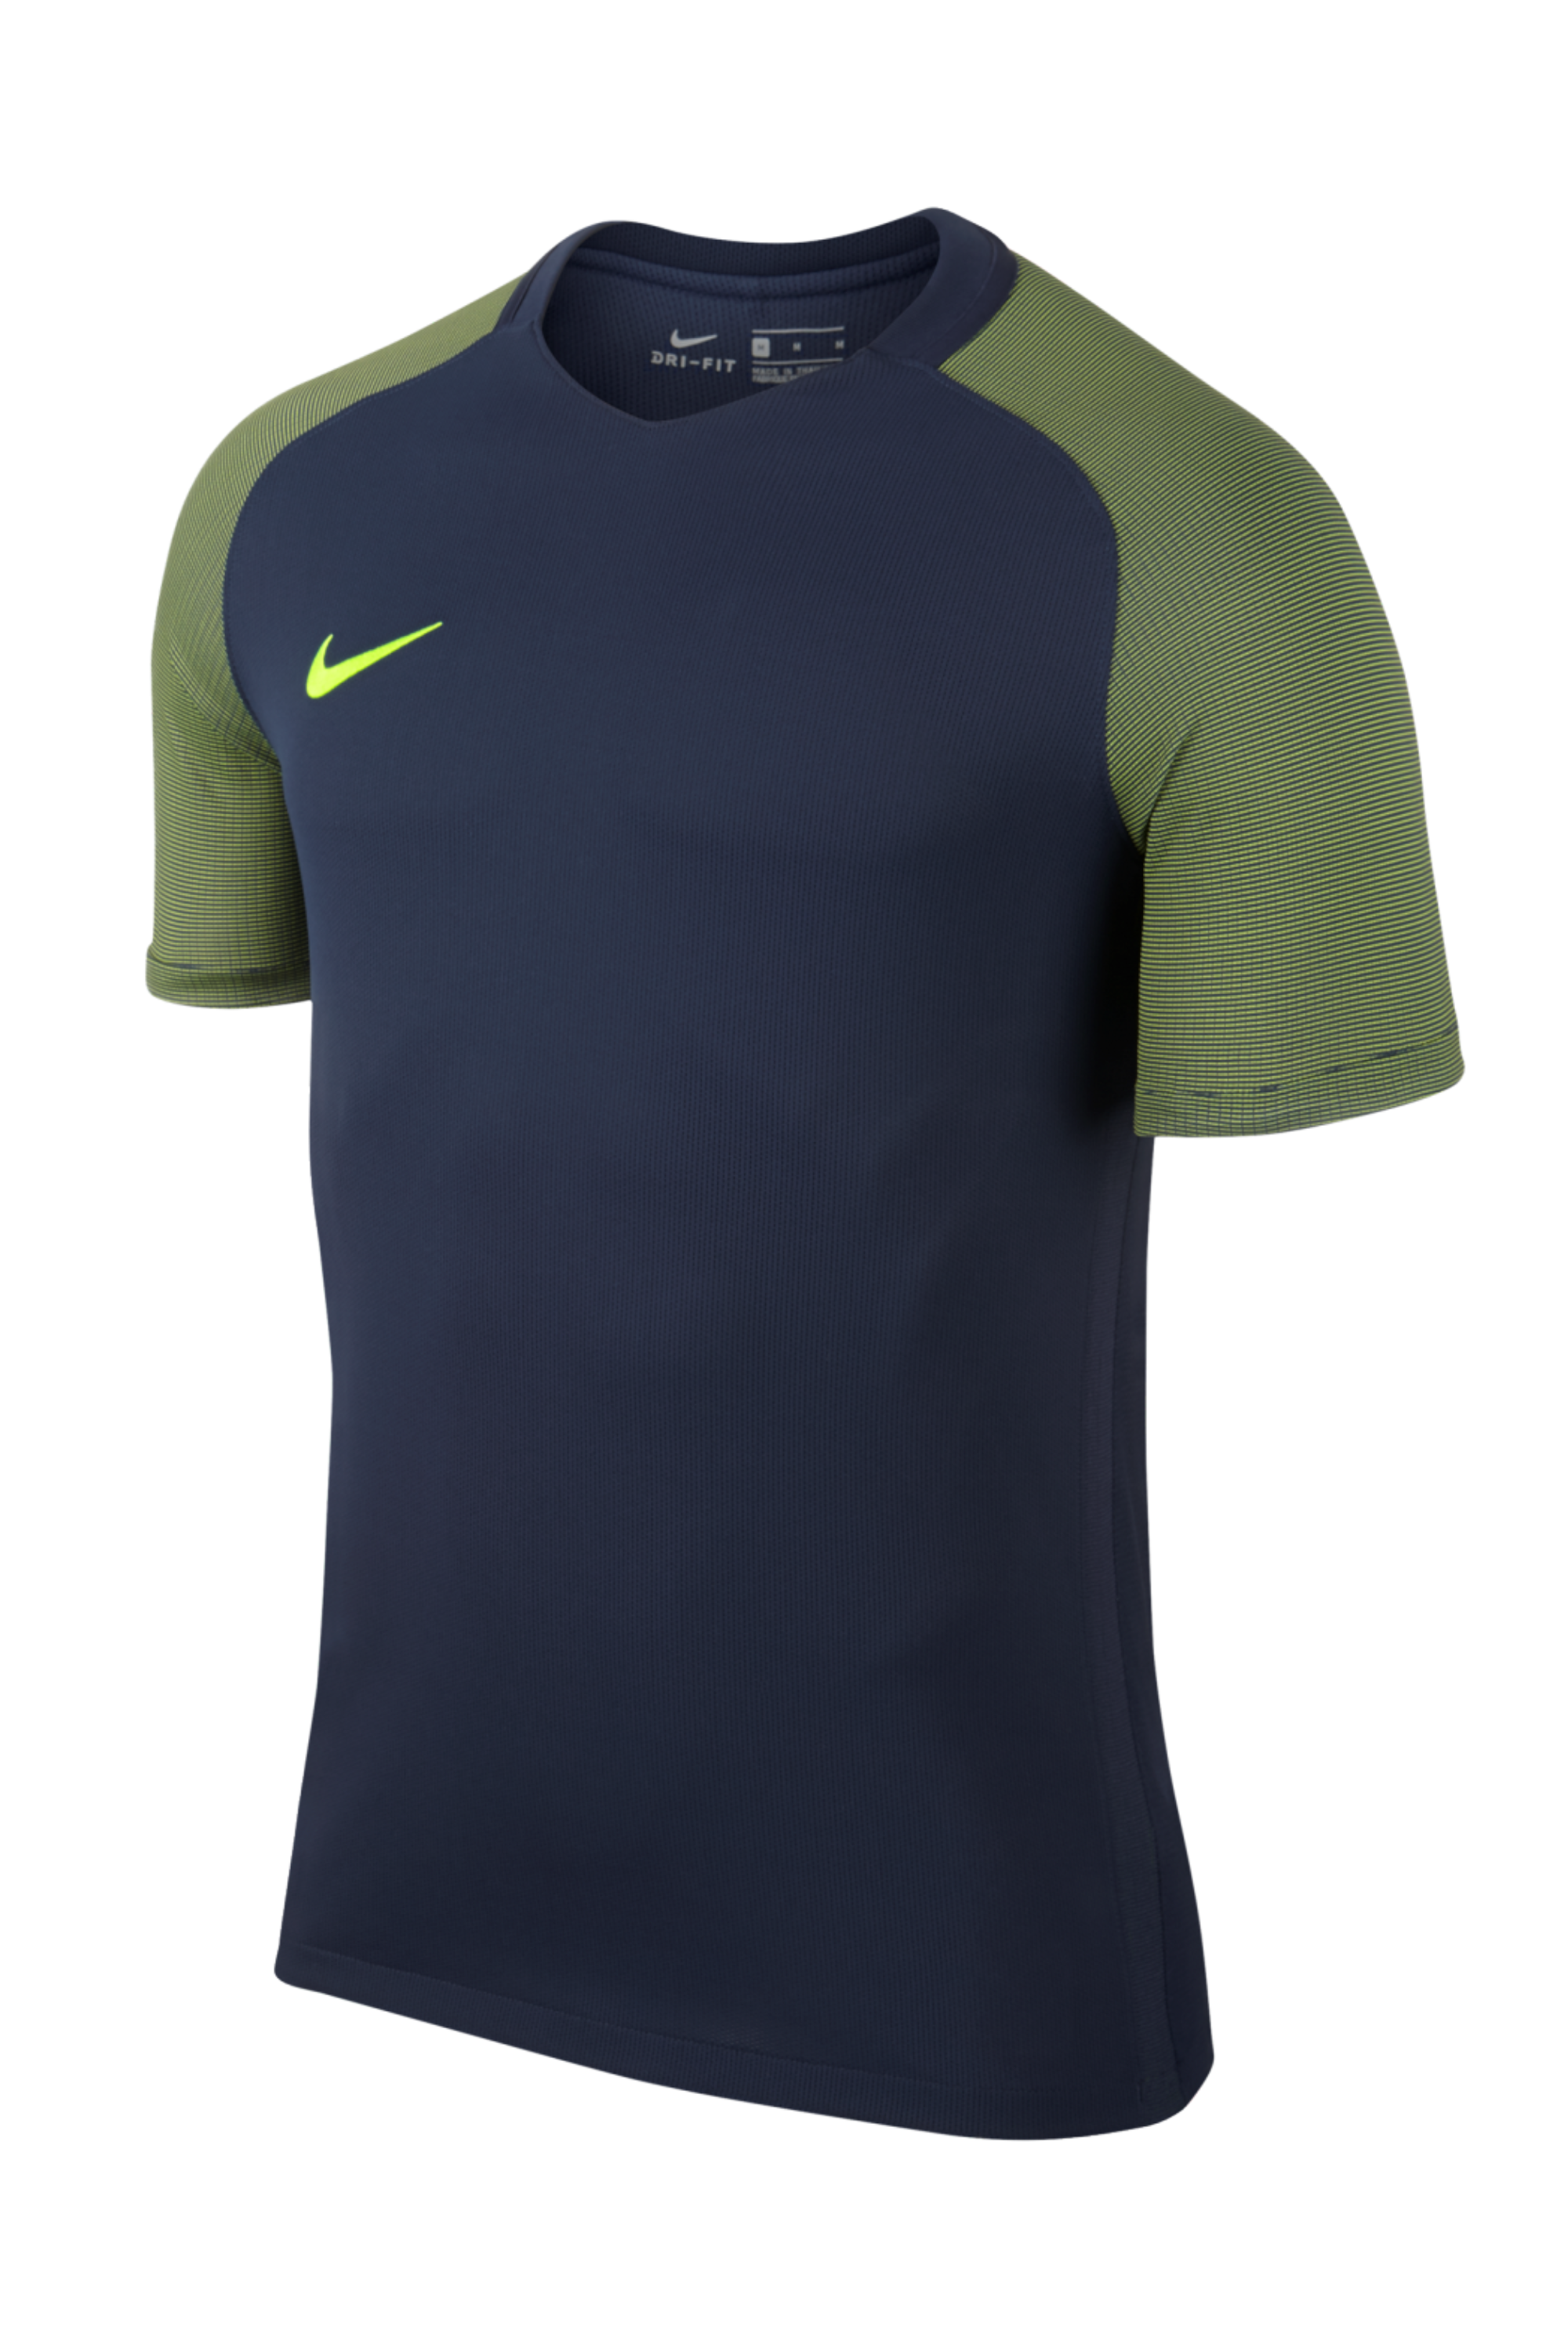 T-Shirt Nike Dry Revolution IV Jersey 